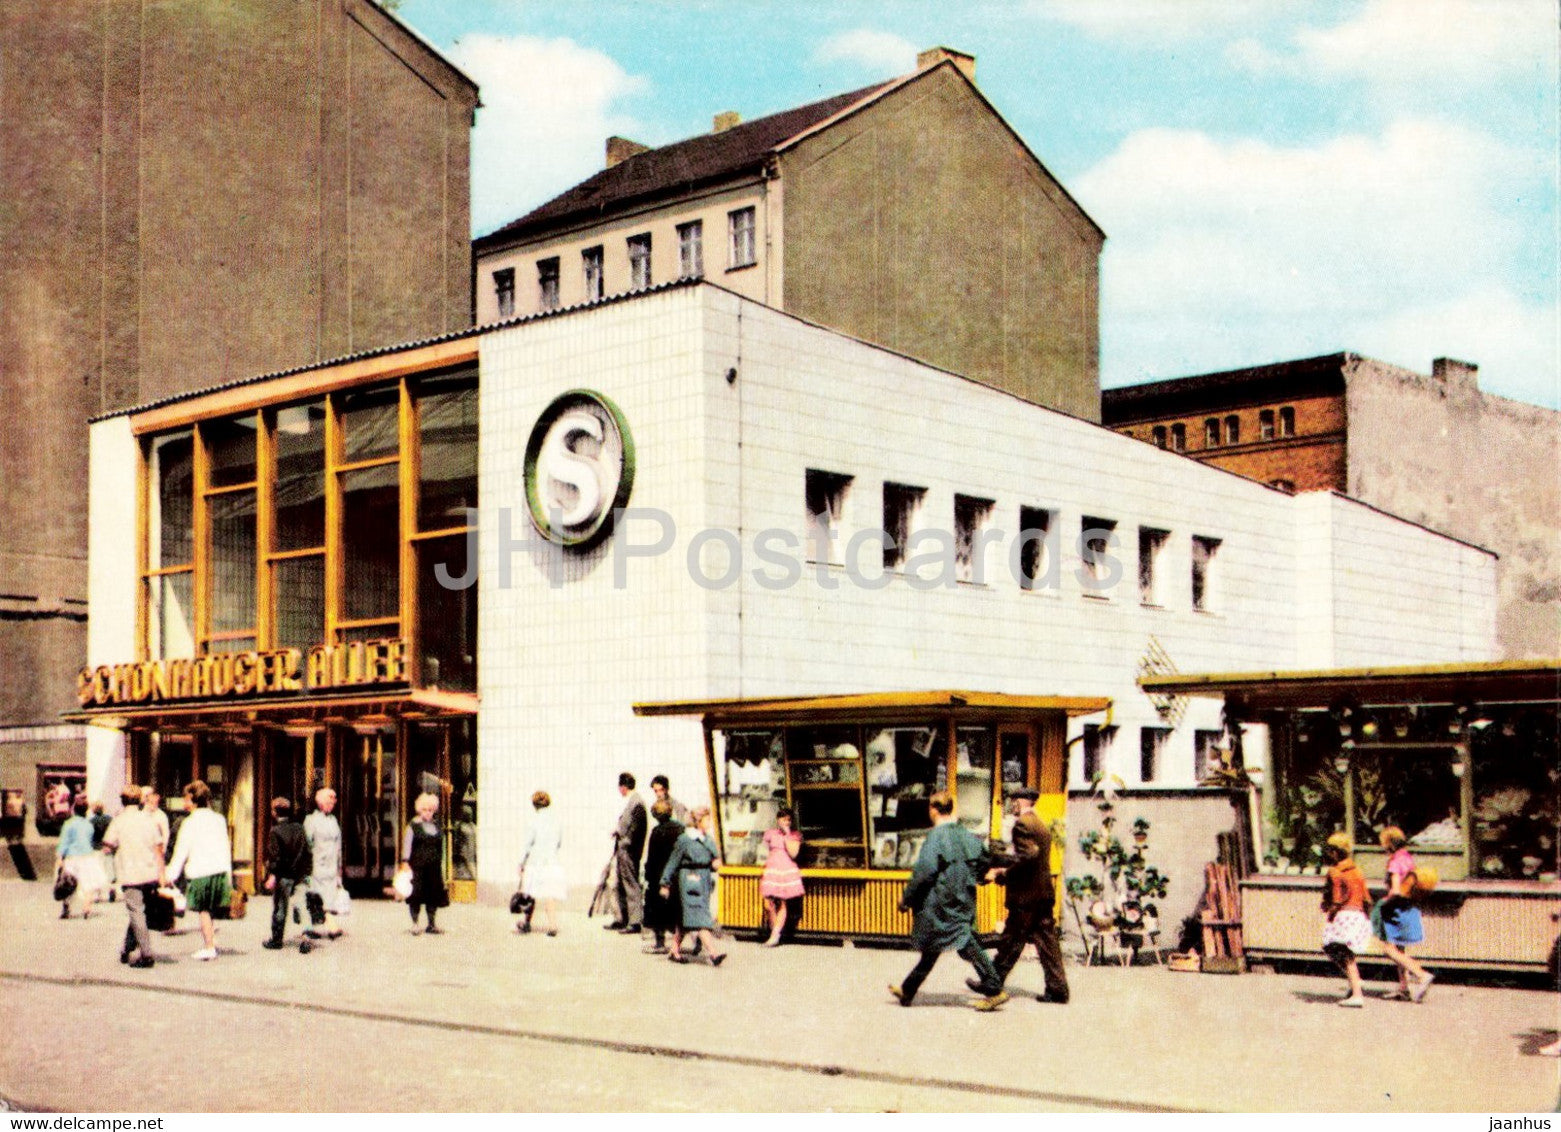 Berlin - Prenzlauer Berg - S Bahnhof Schonhauser Allee - railway station - 1967 - Germany DDR - used - JH Postcards